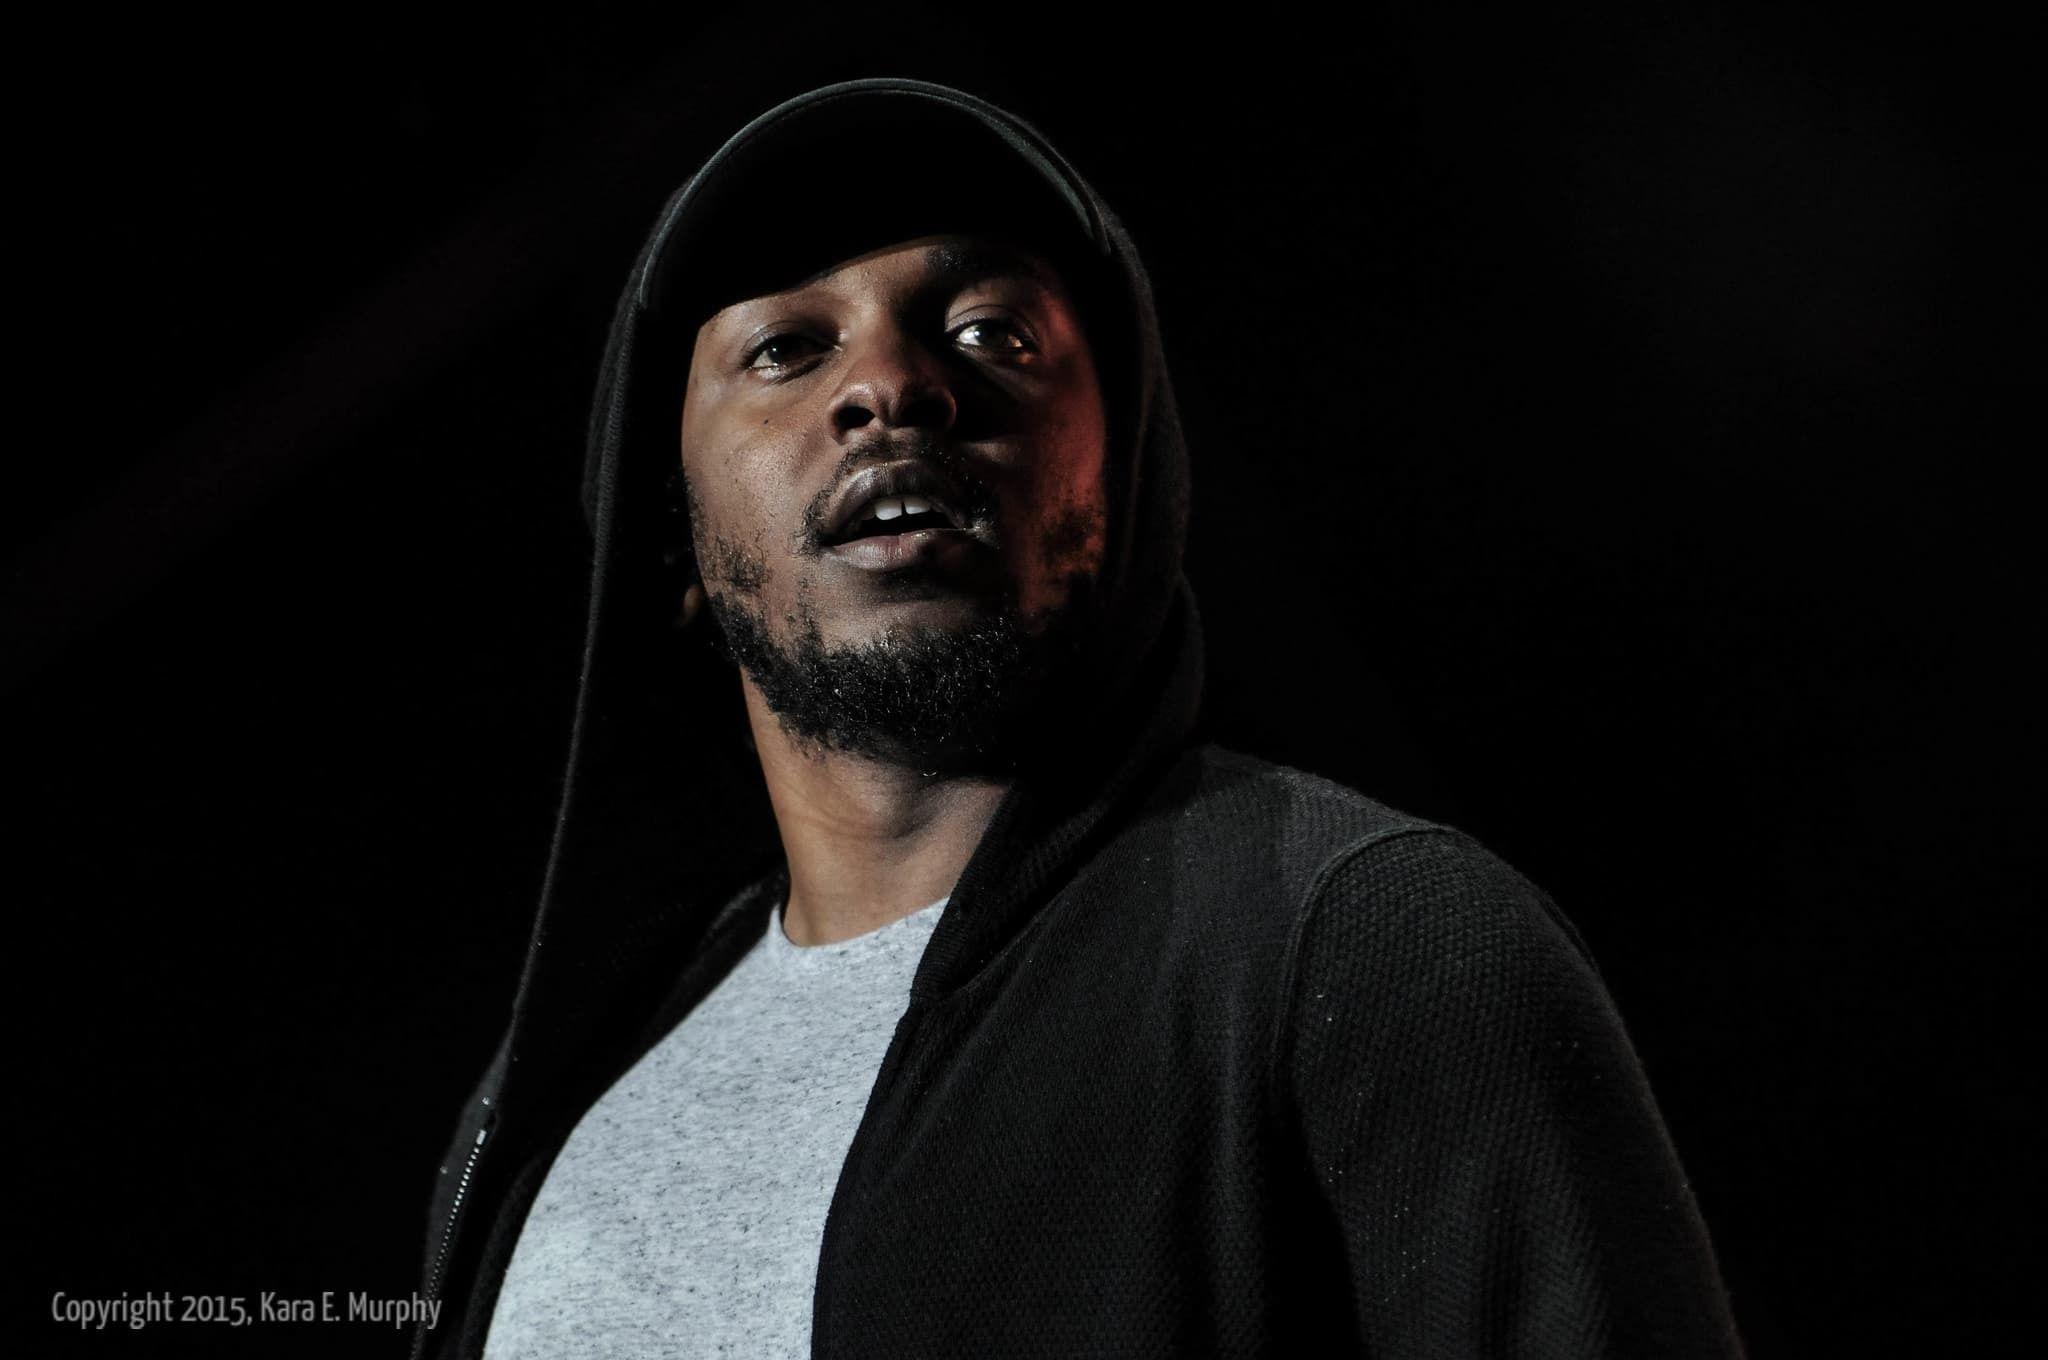 Kendrick Lamar Wallpaper Image Photo Picture Background